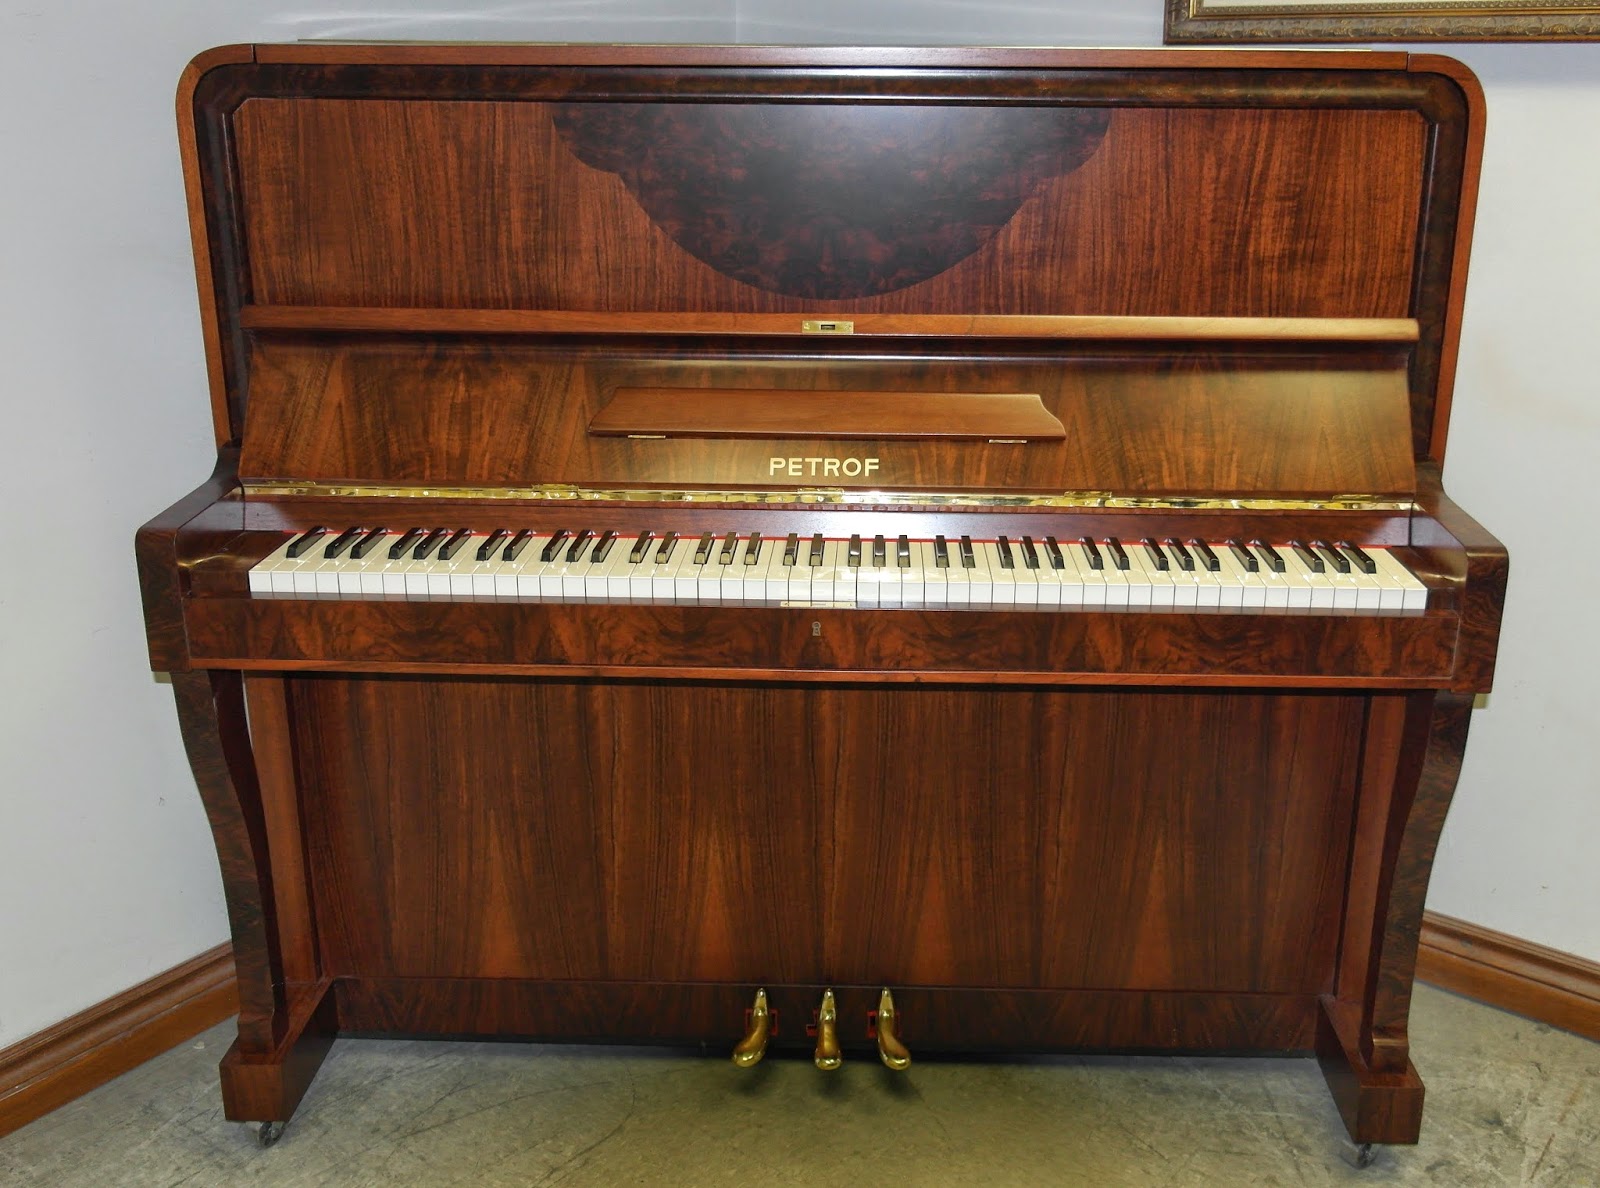 Used piano sale in Toronto area Petrof upright piano 52